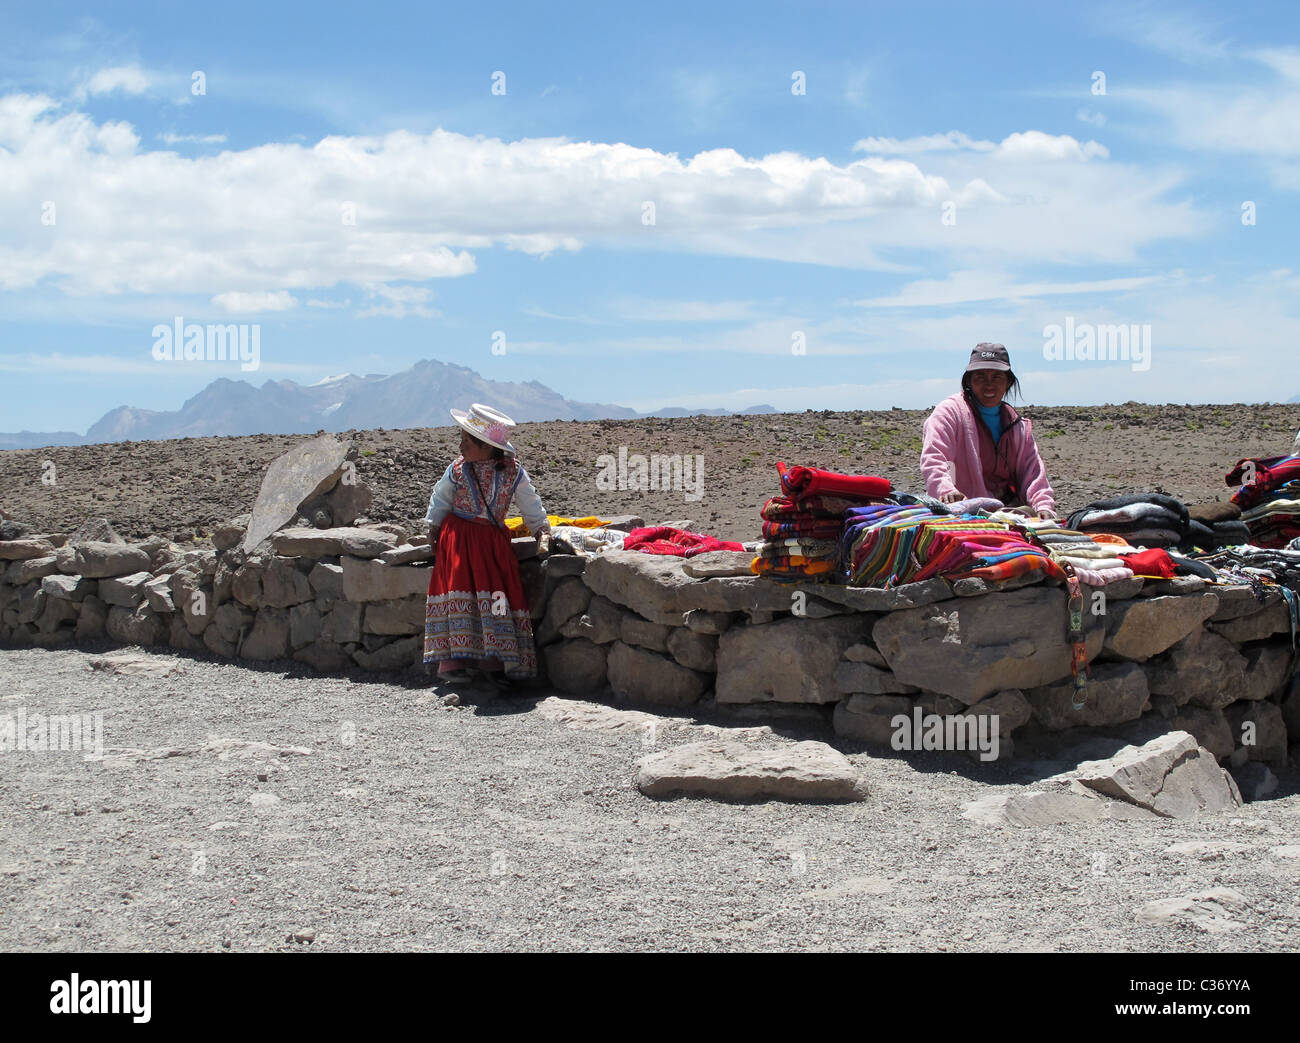 Cordillera volcanica en los Andes Centrales with Quechua woman selling textiles, Peru Stock Photo